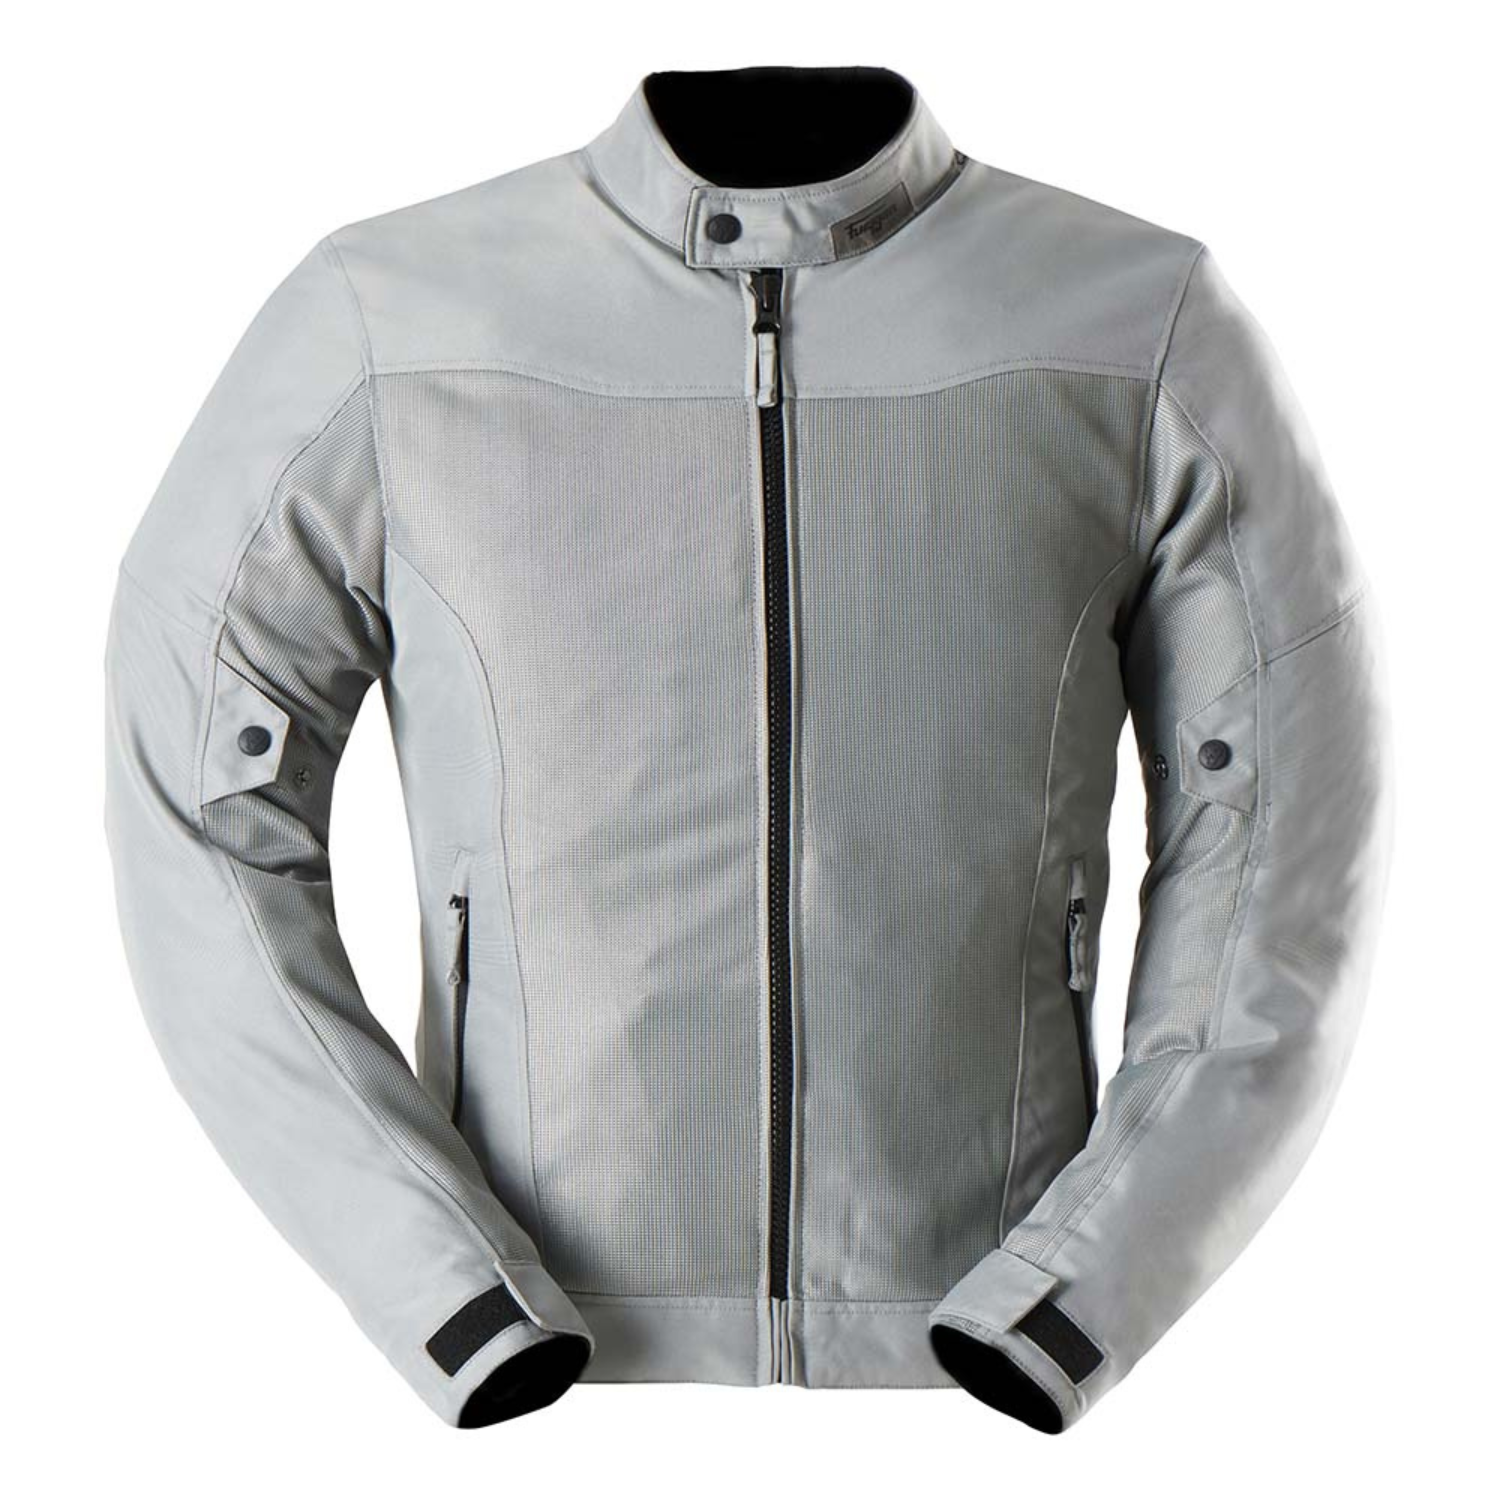 Image of Furygan Mistral Evo 3 Jacket Grey Size 3XL EN